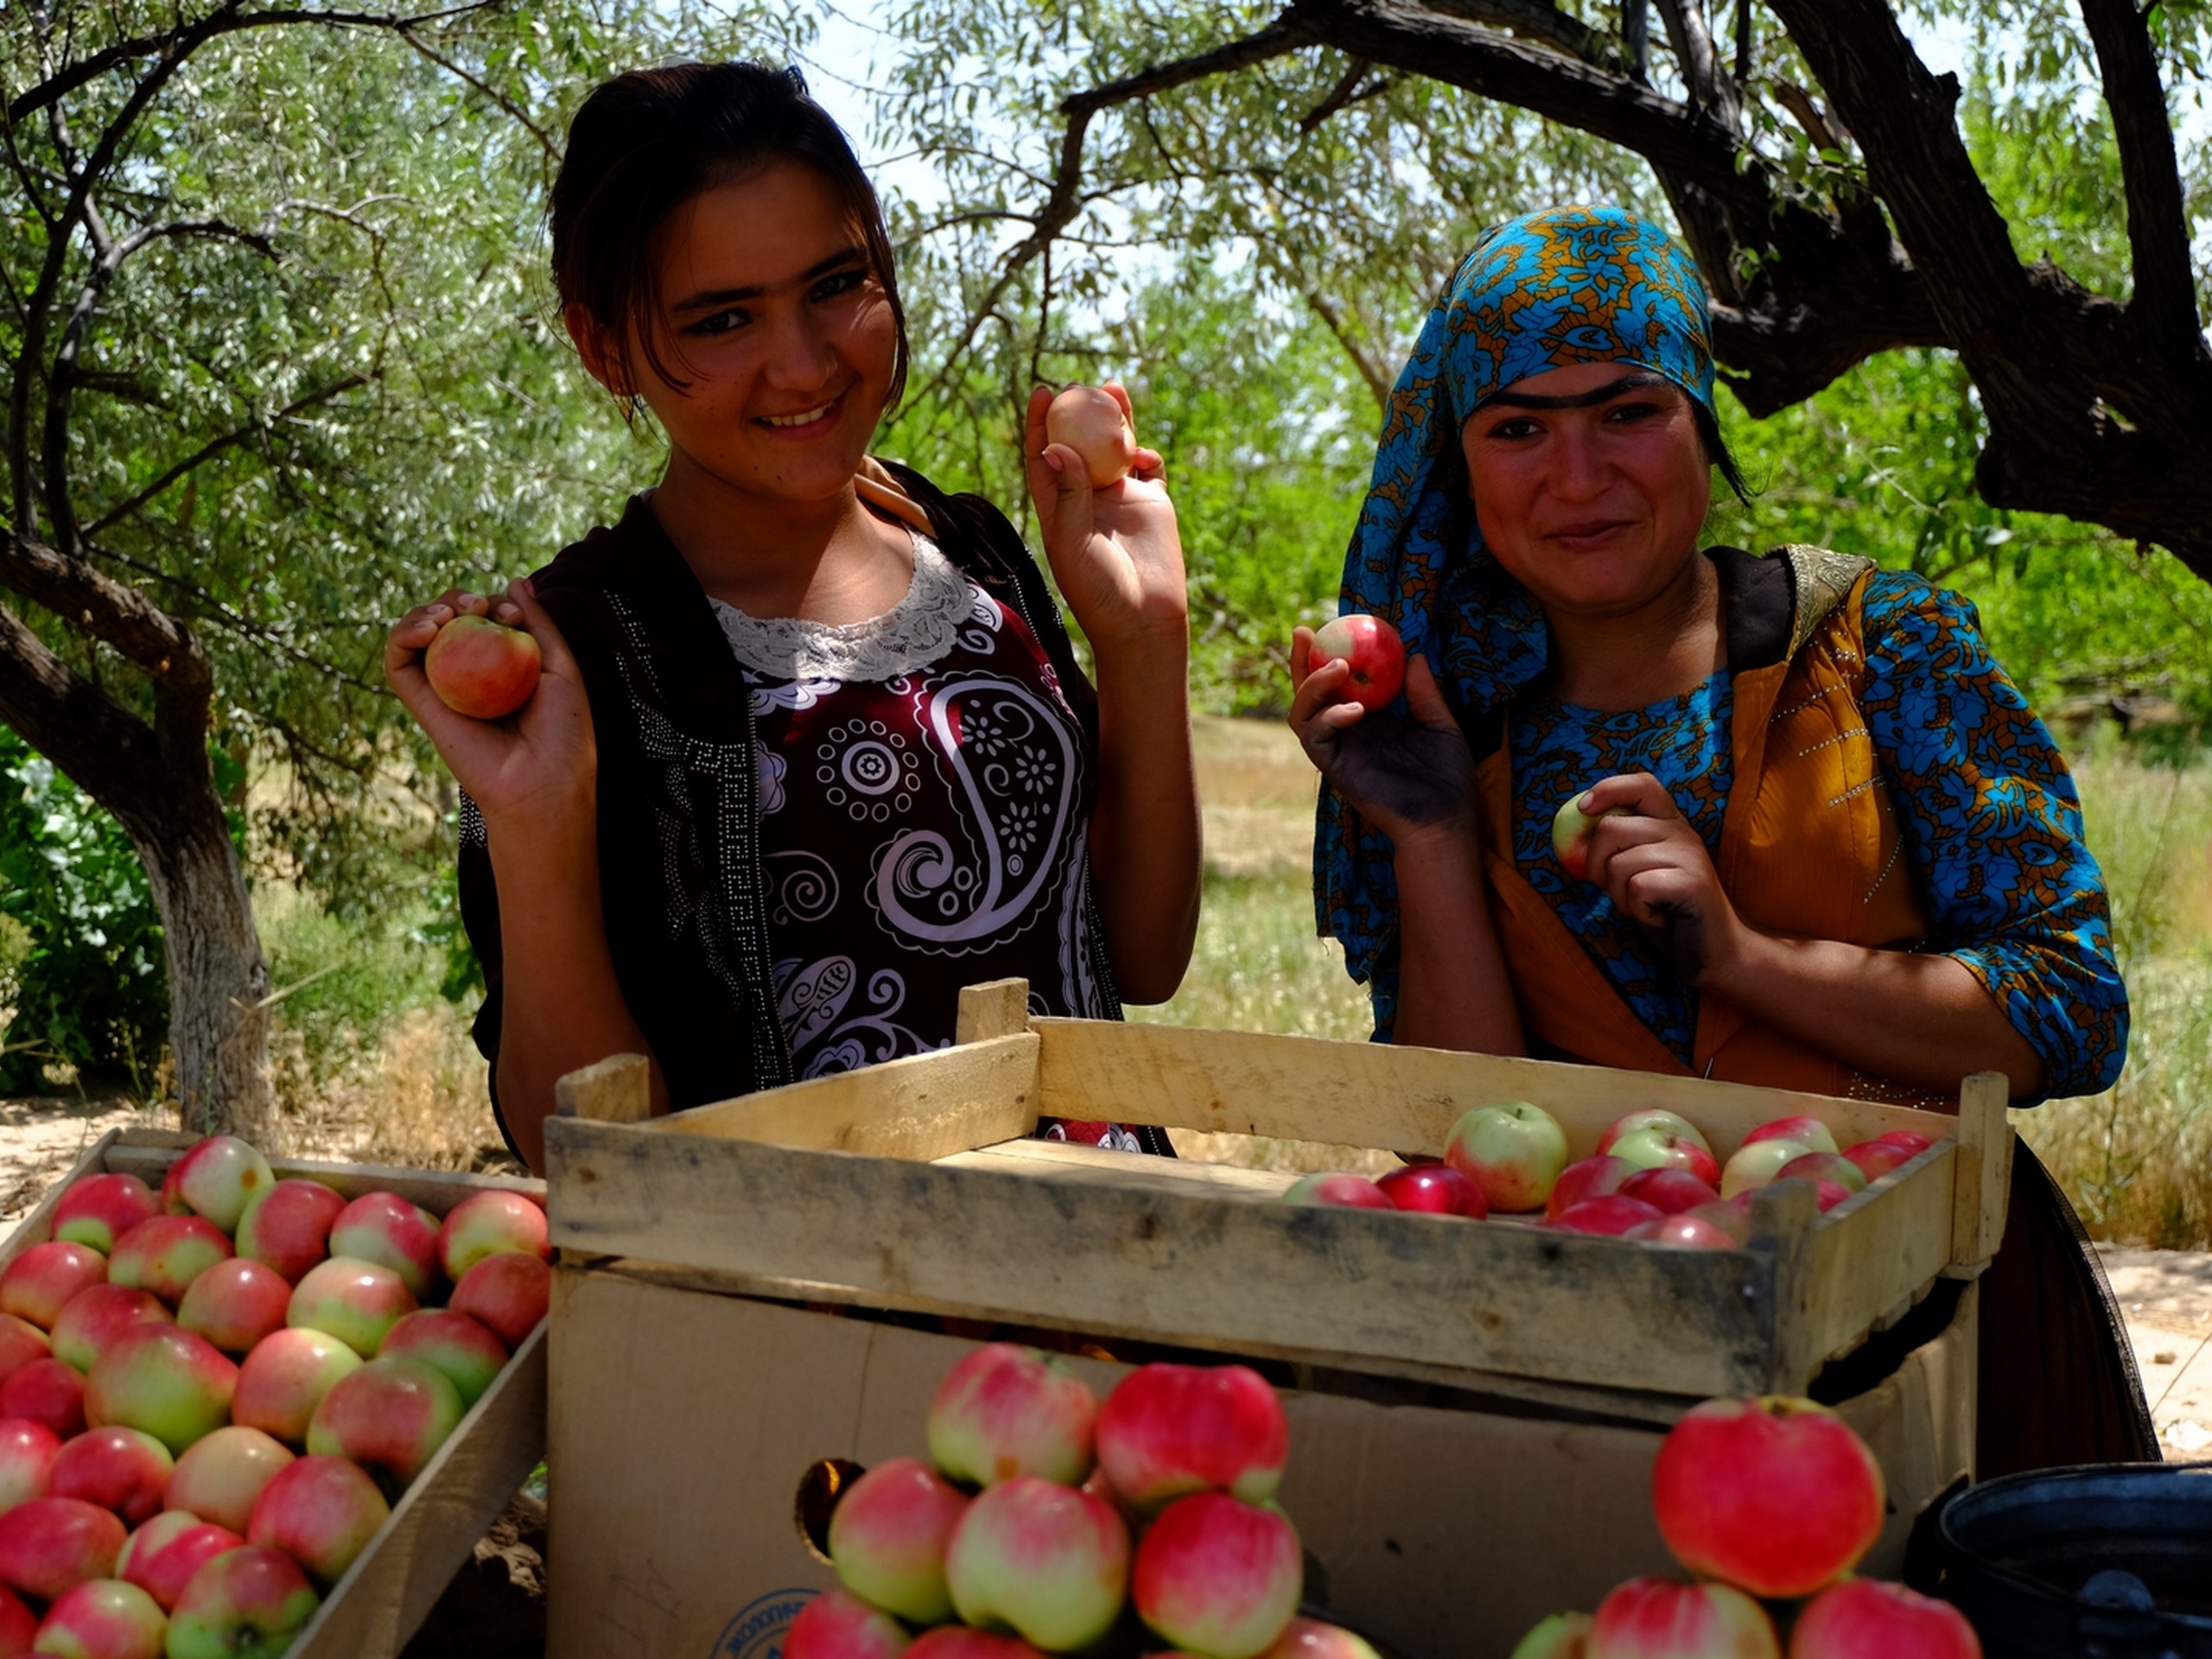 Two Uzbek ladies selling the local goods